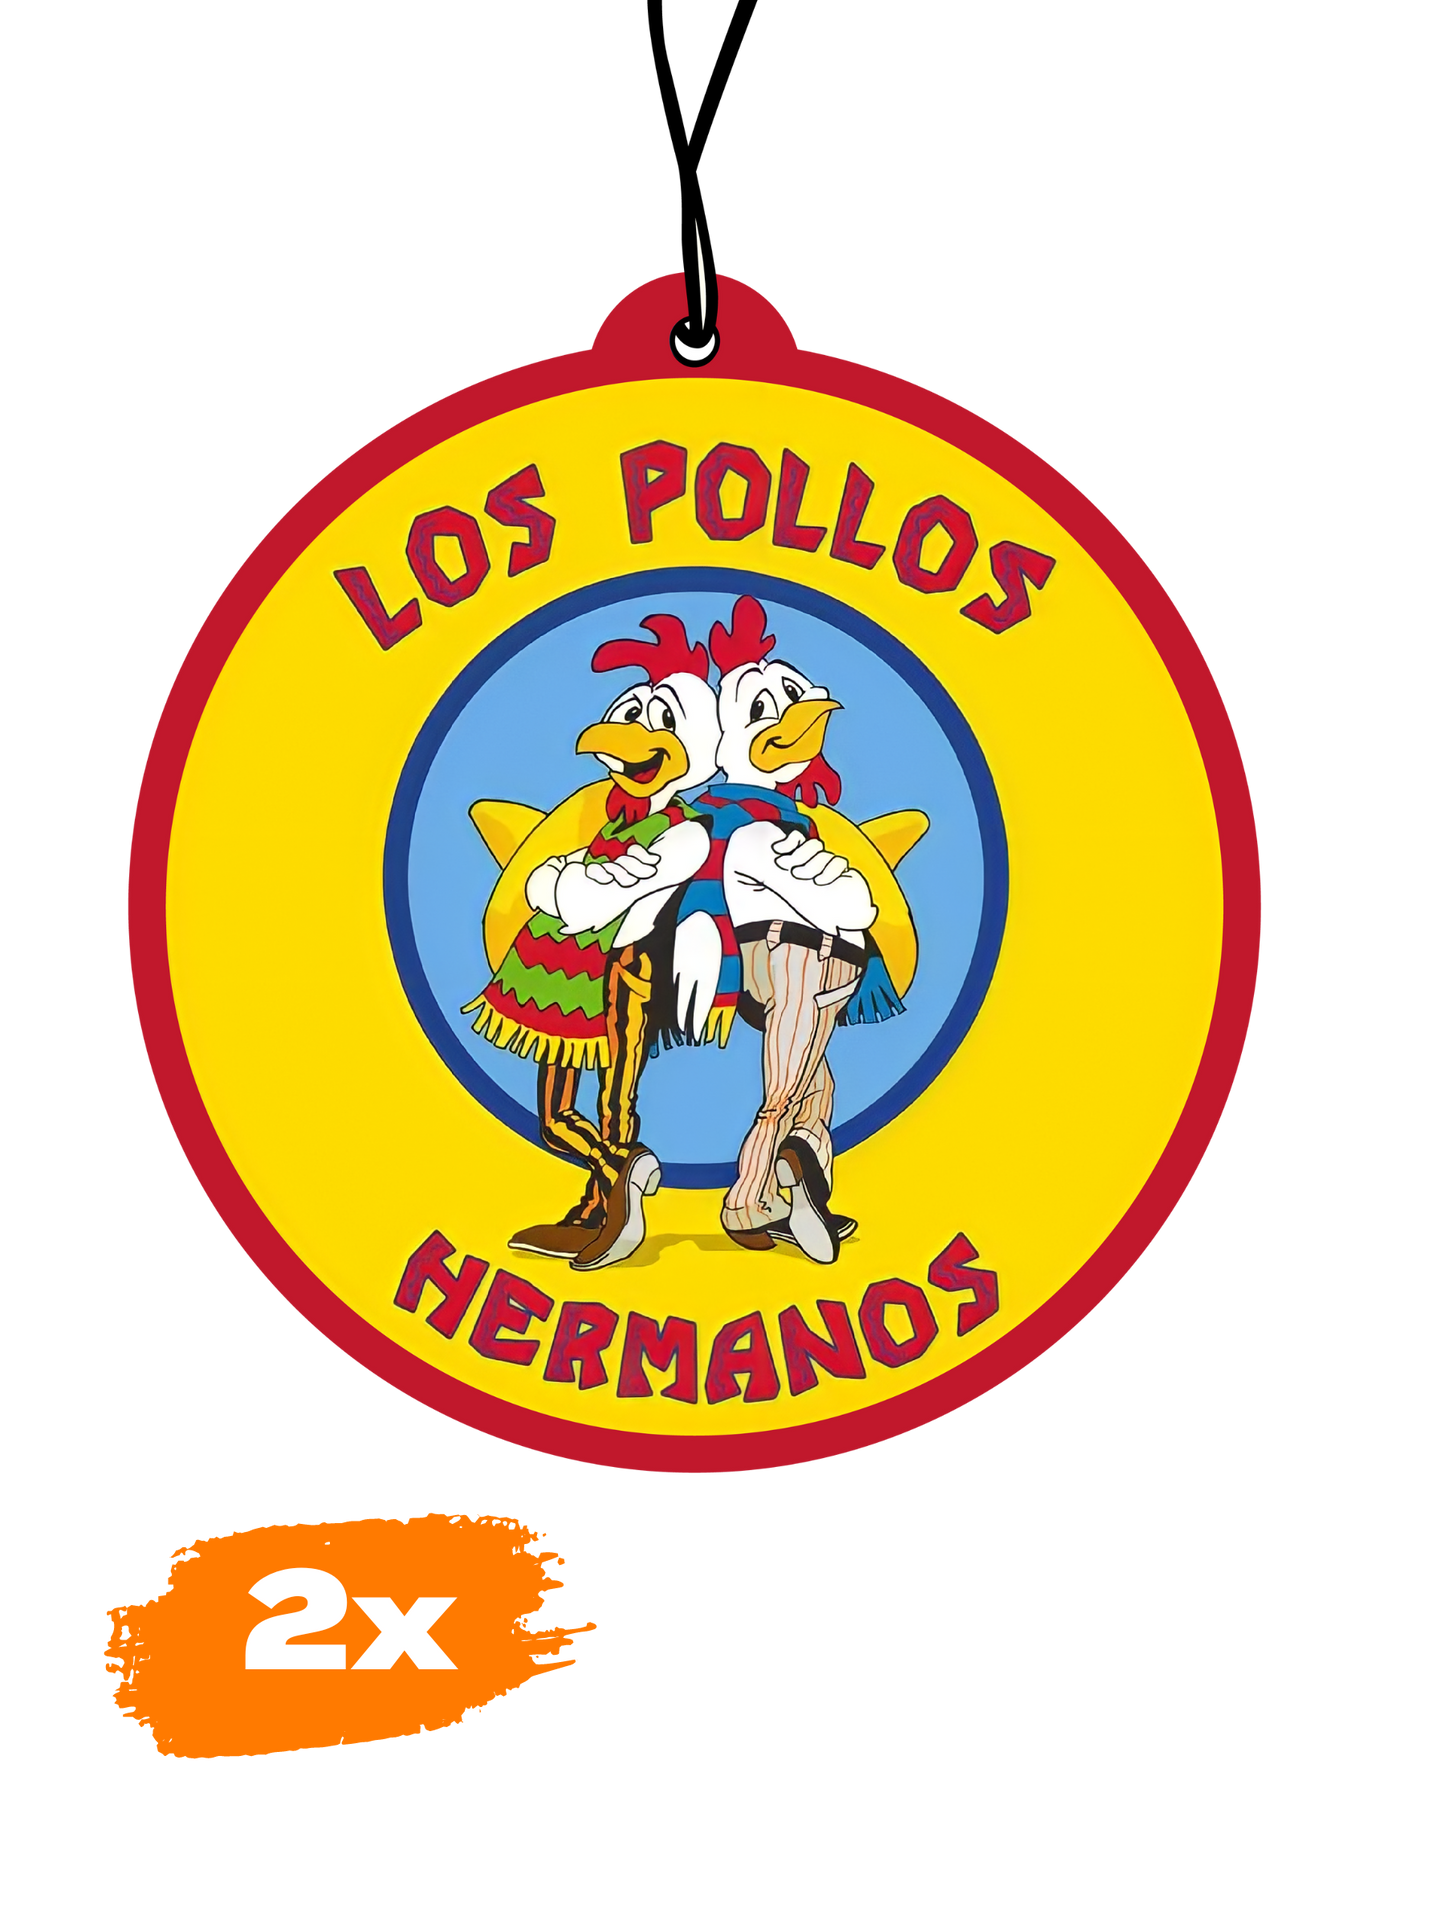 2x LOS POLLOS HERMANOS DUFTY'S / air freshener